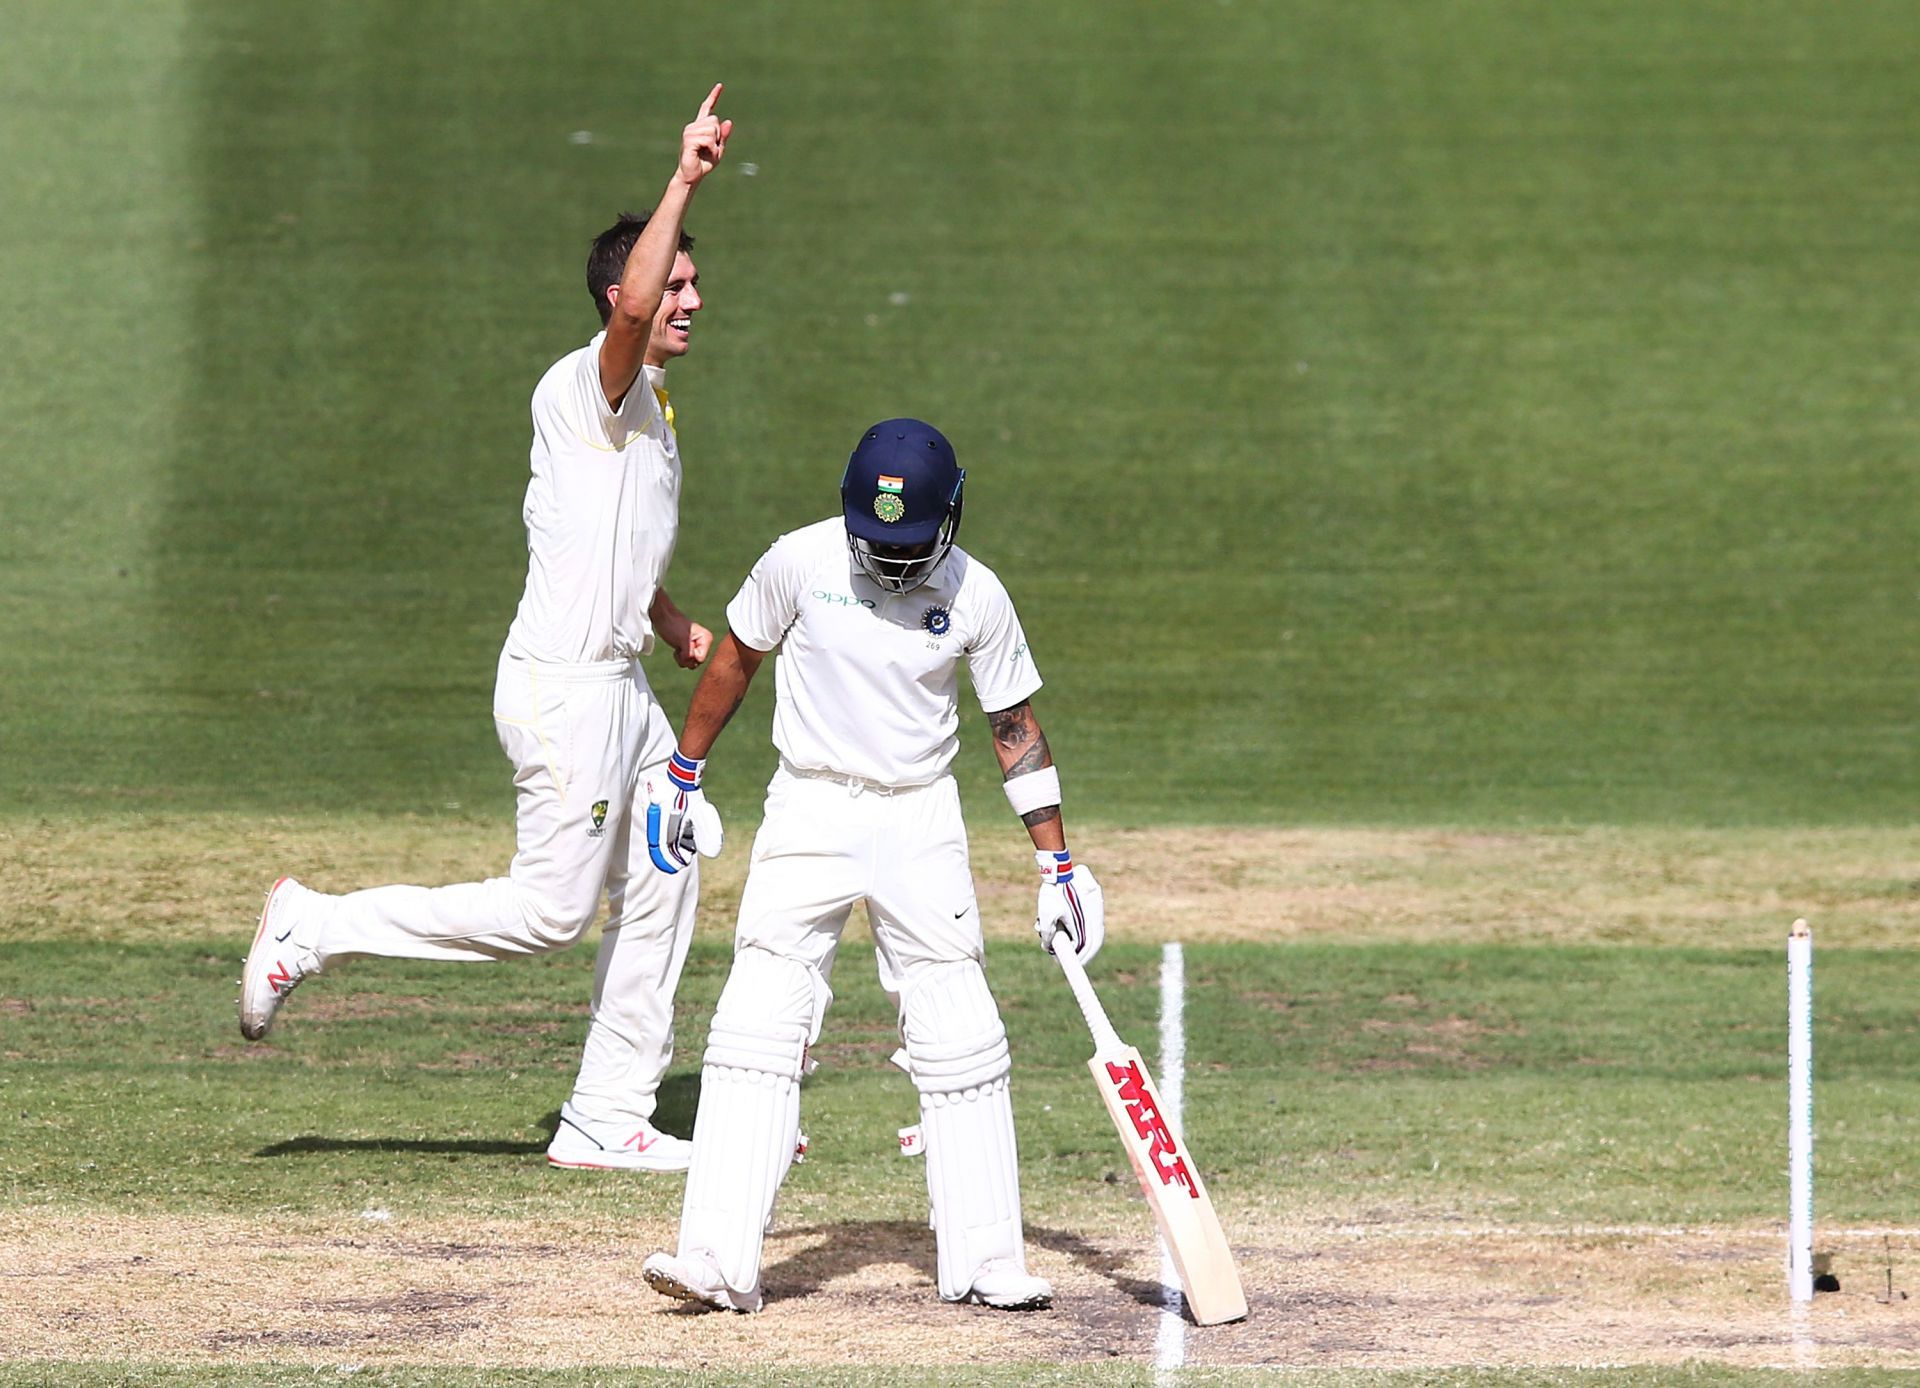 Australia v India - 3rd Test: Day 3